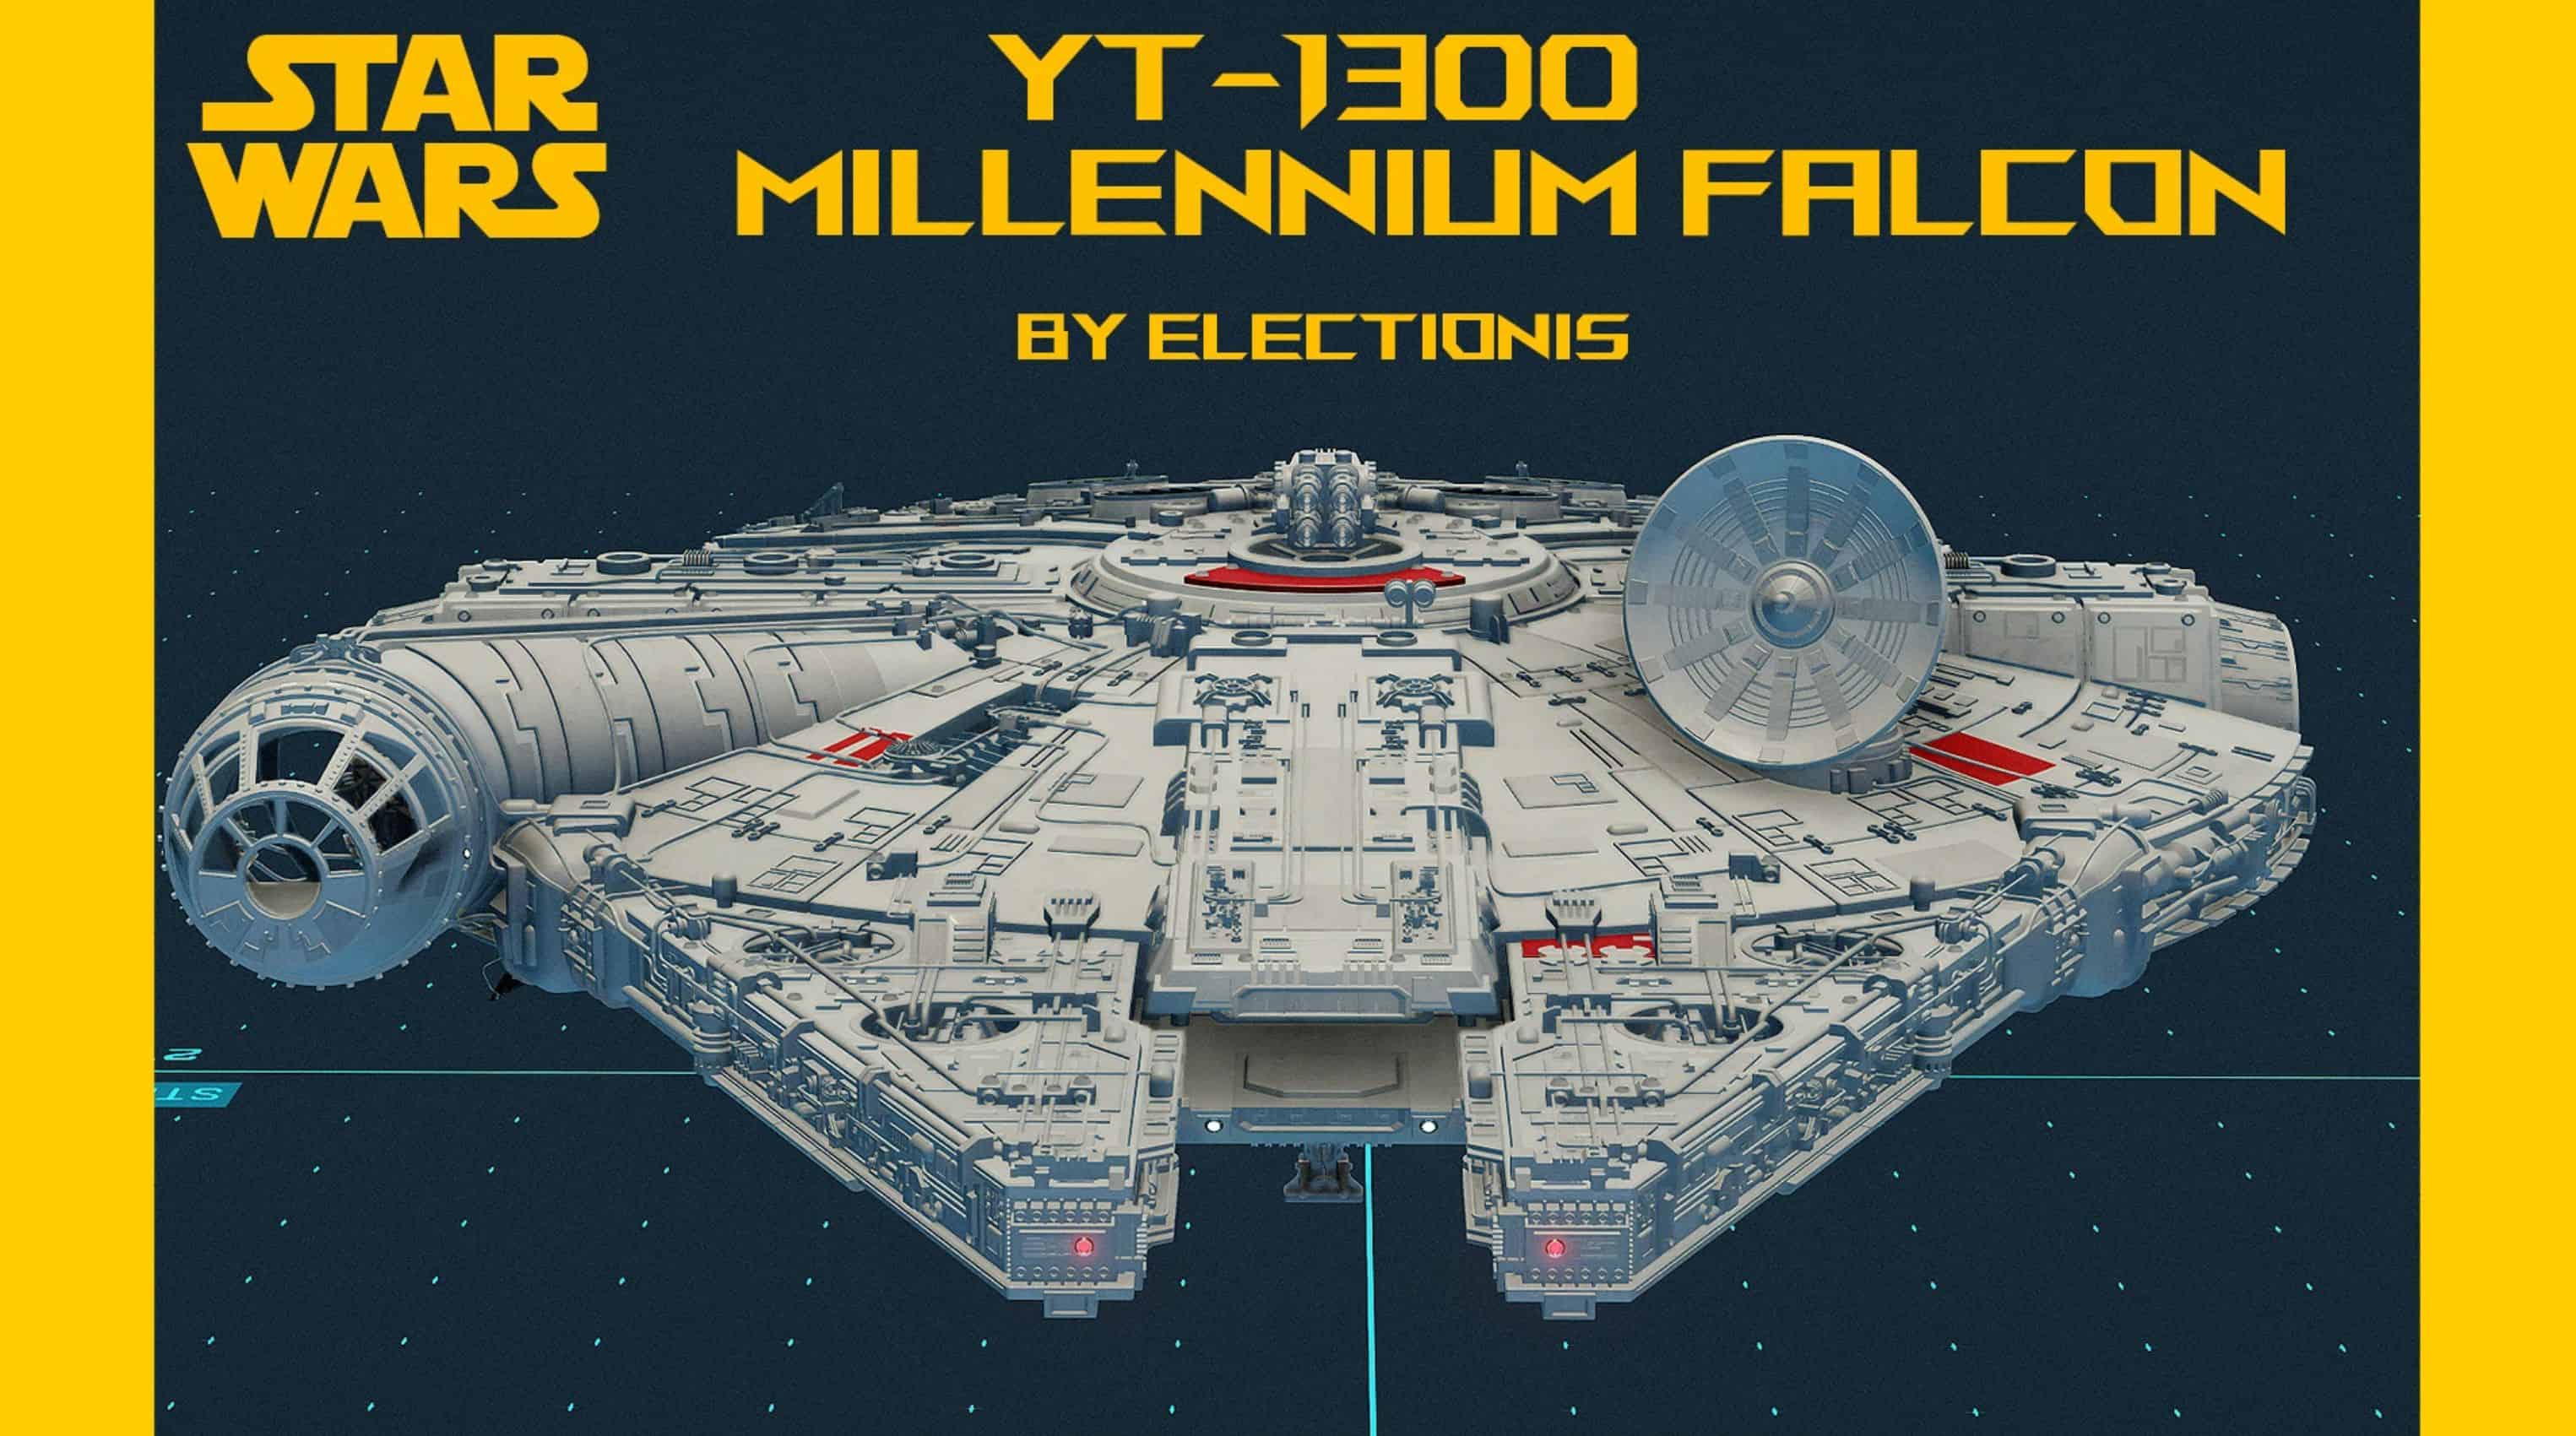 Star Wars YT-1300 Millennium Falcon 1977